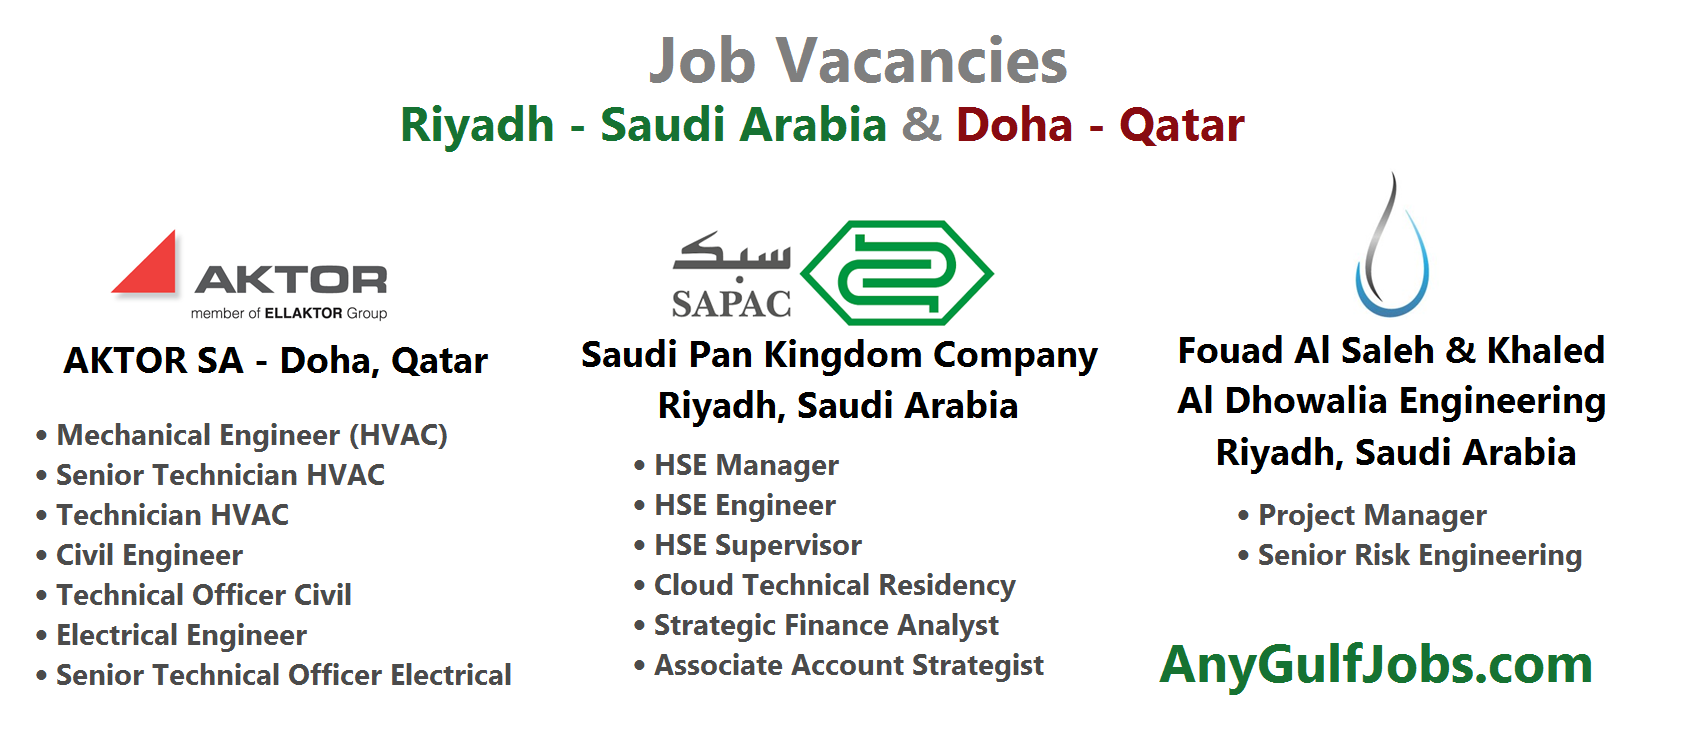 AKTOR SA Company Job Vacancies in Doha, Qatar